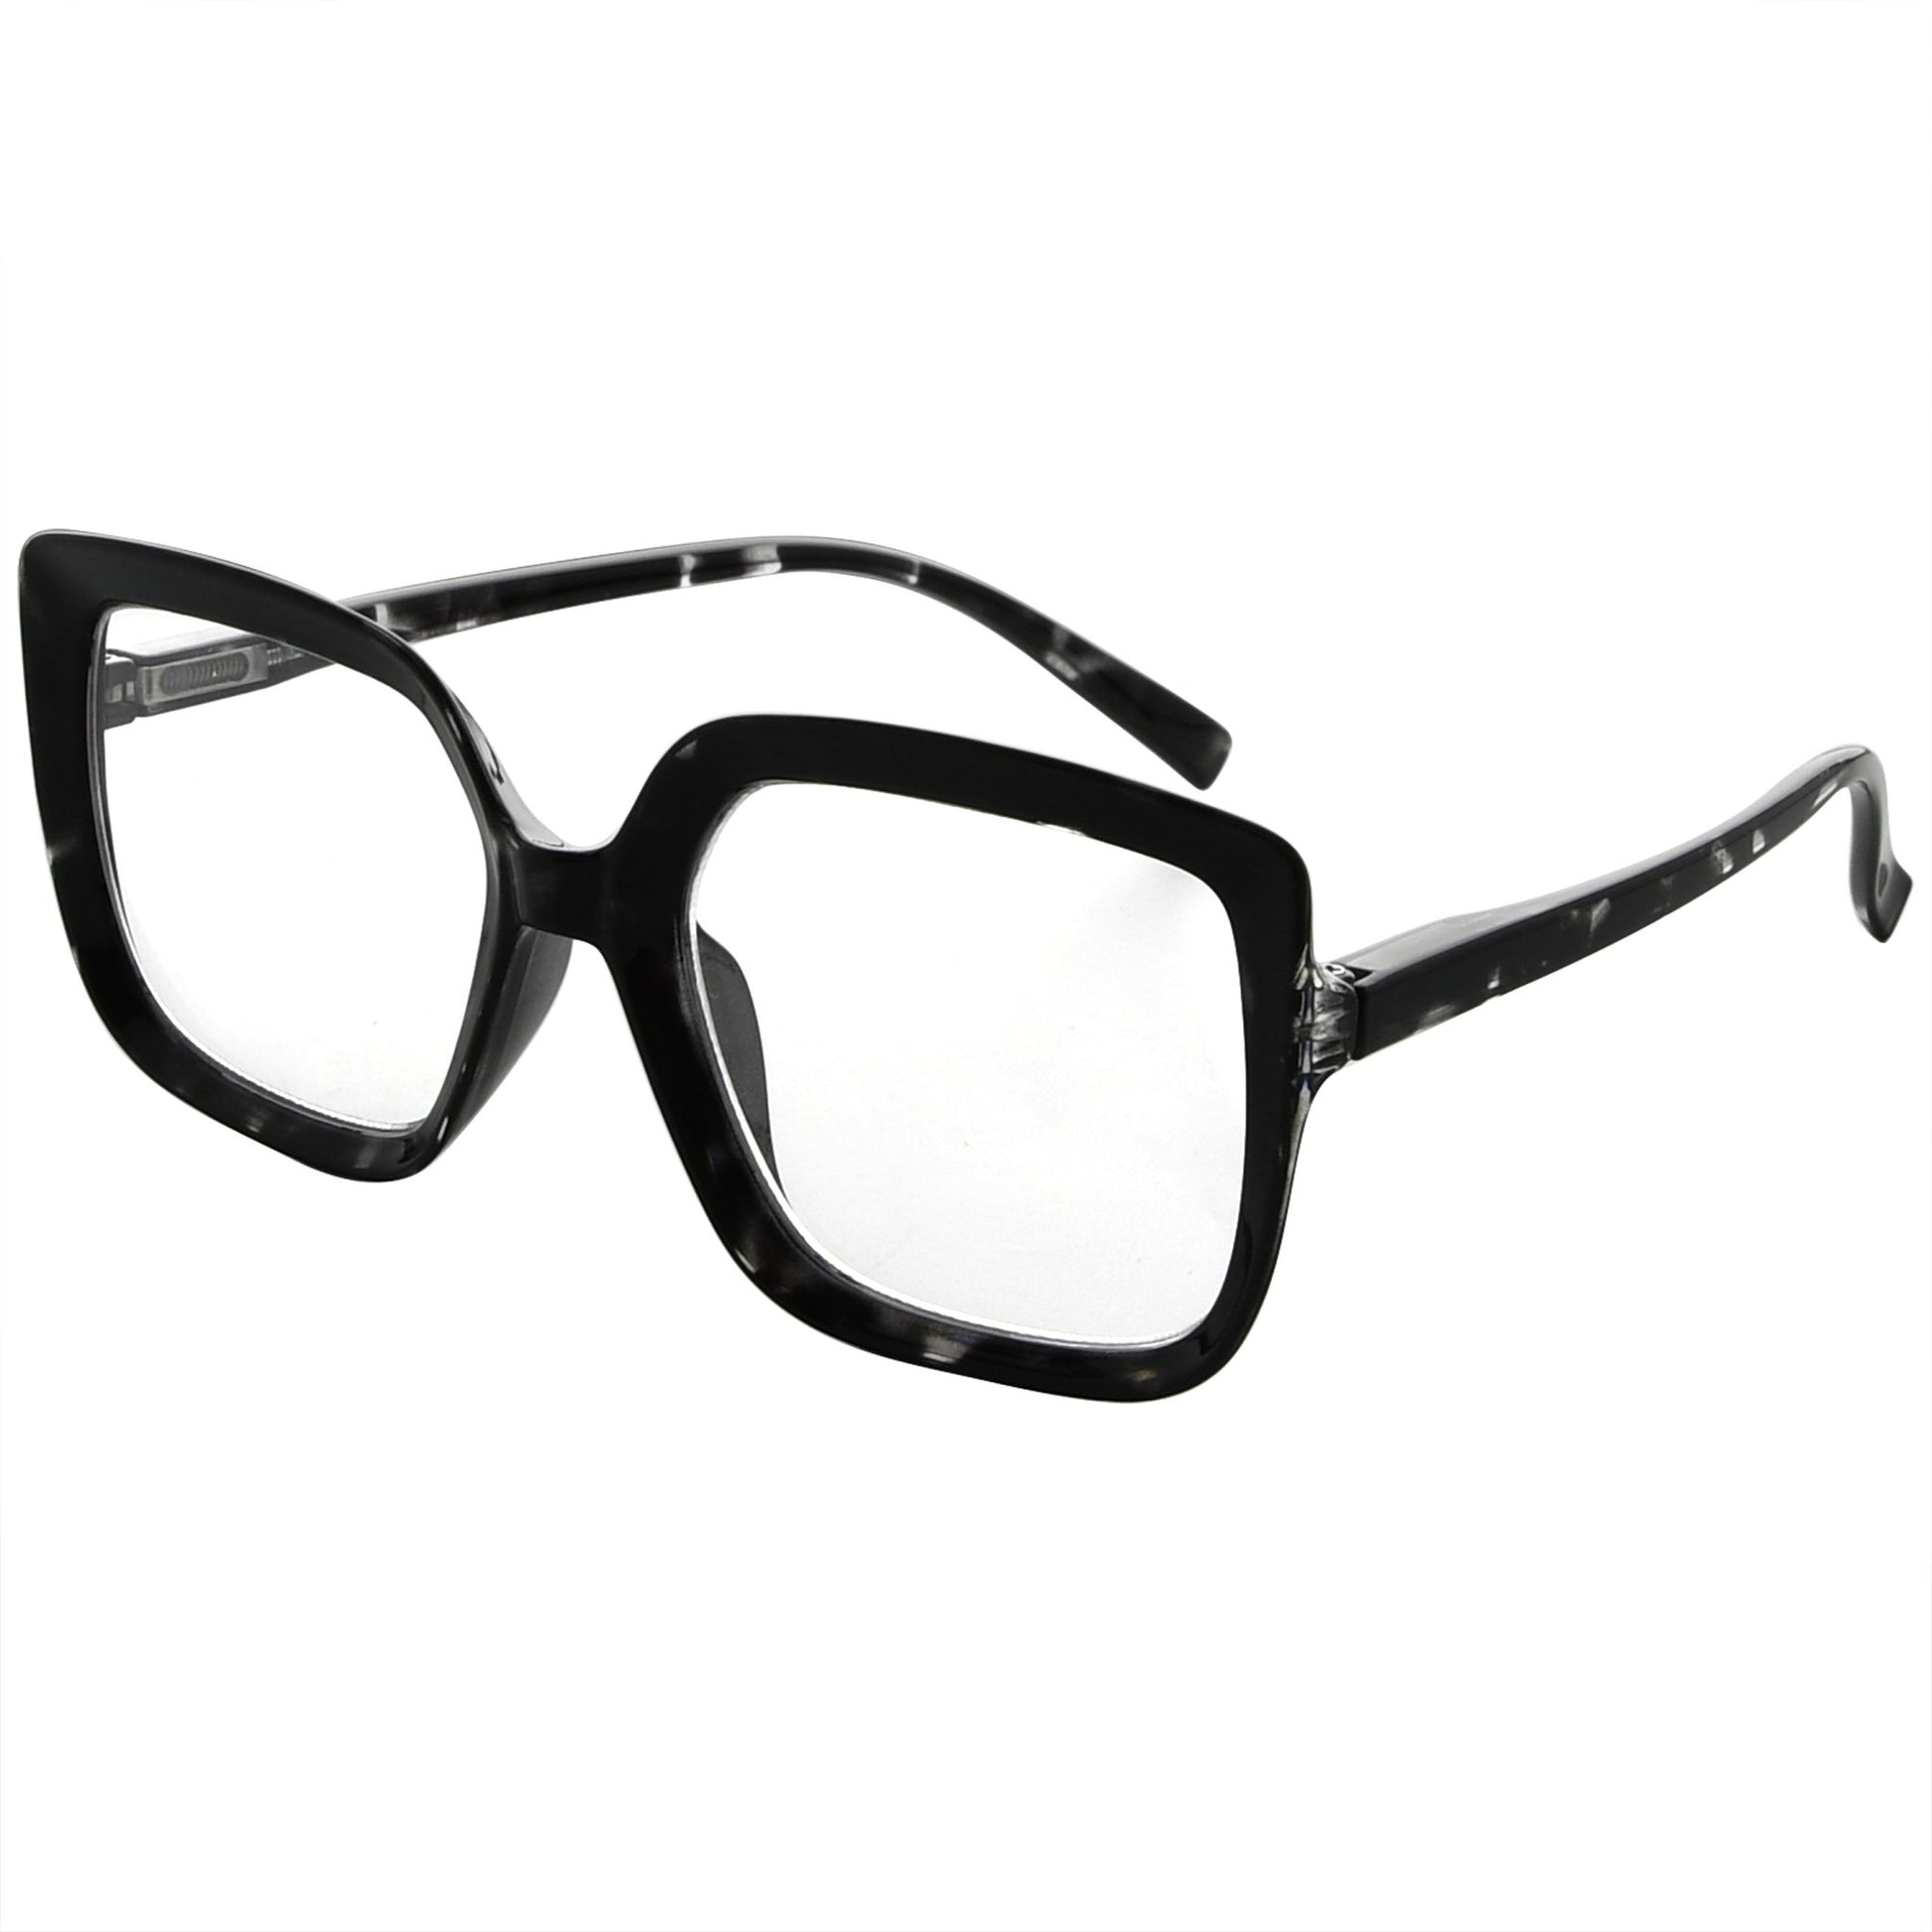 Specsmakers Eco Unisex Reading Glasses Full Frame Rectangle Large